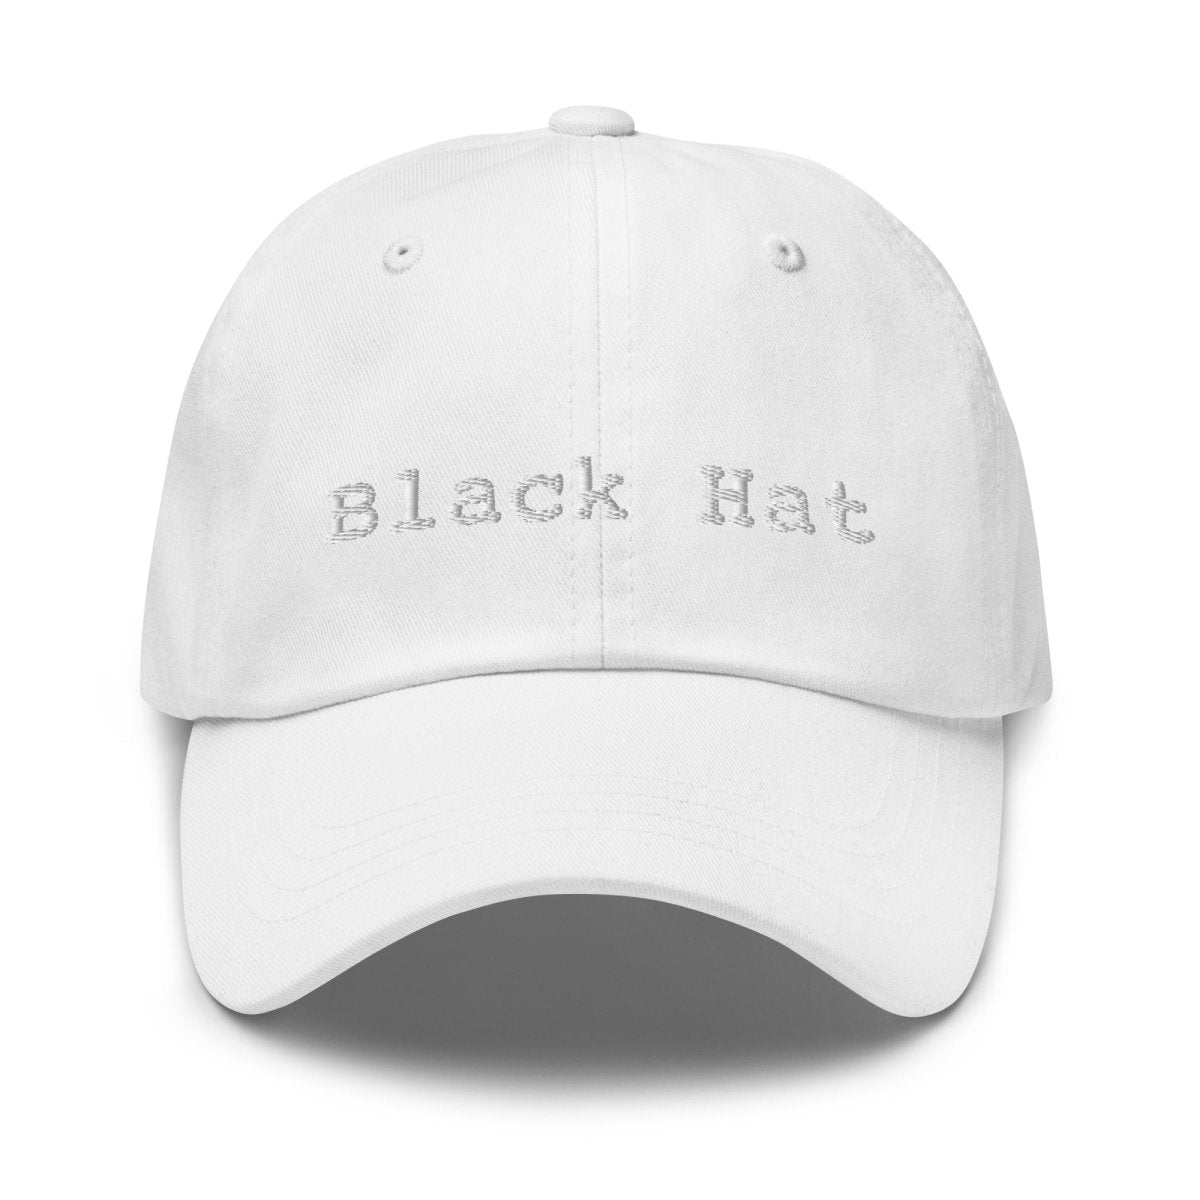 Black Hat Embroidered Cap - White - AI Store